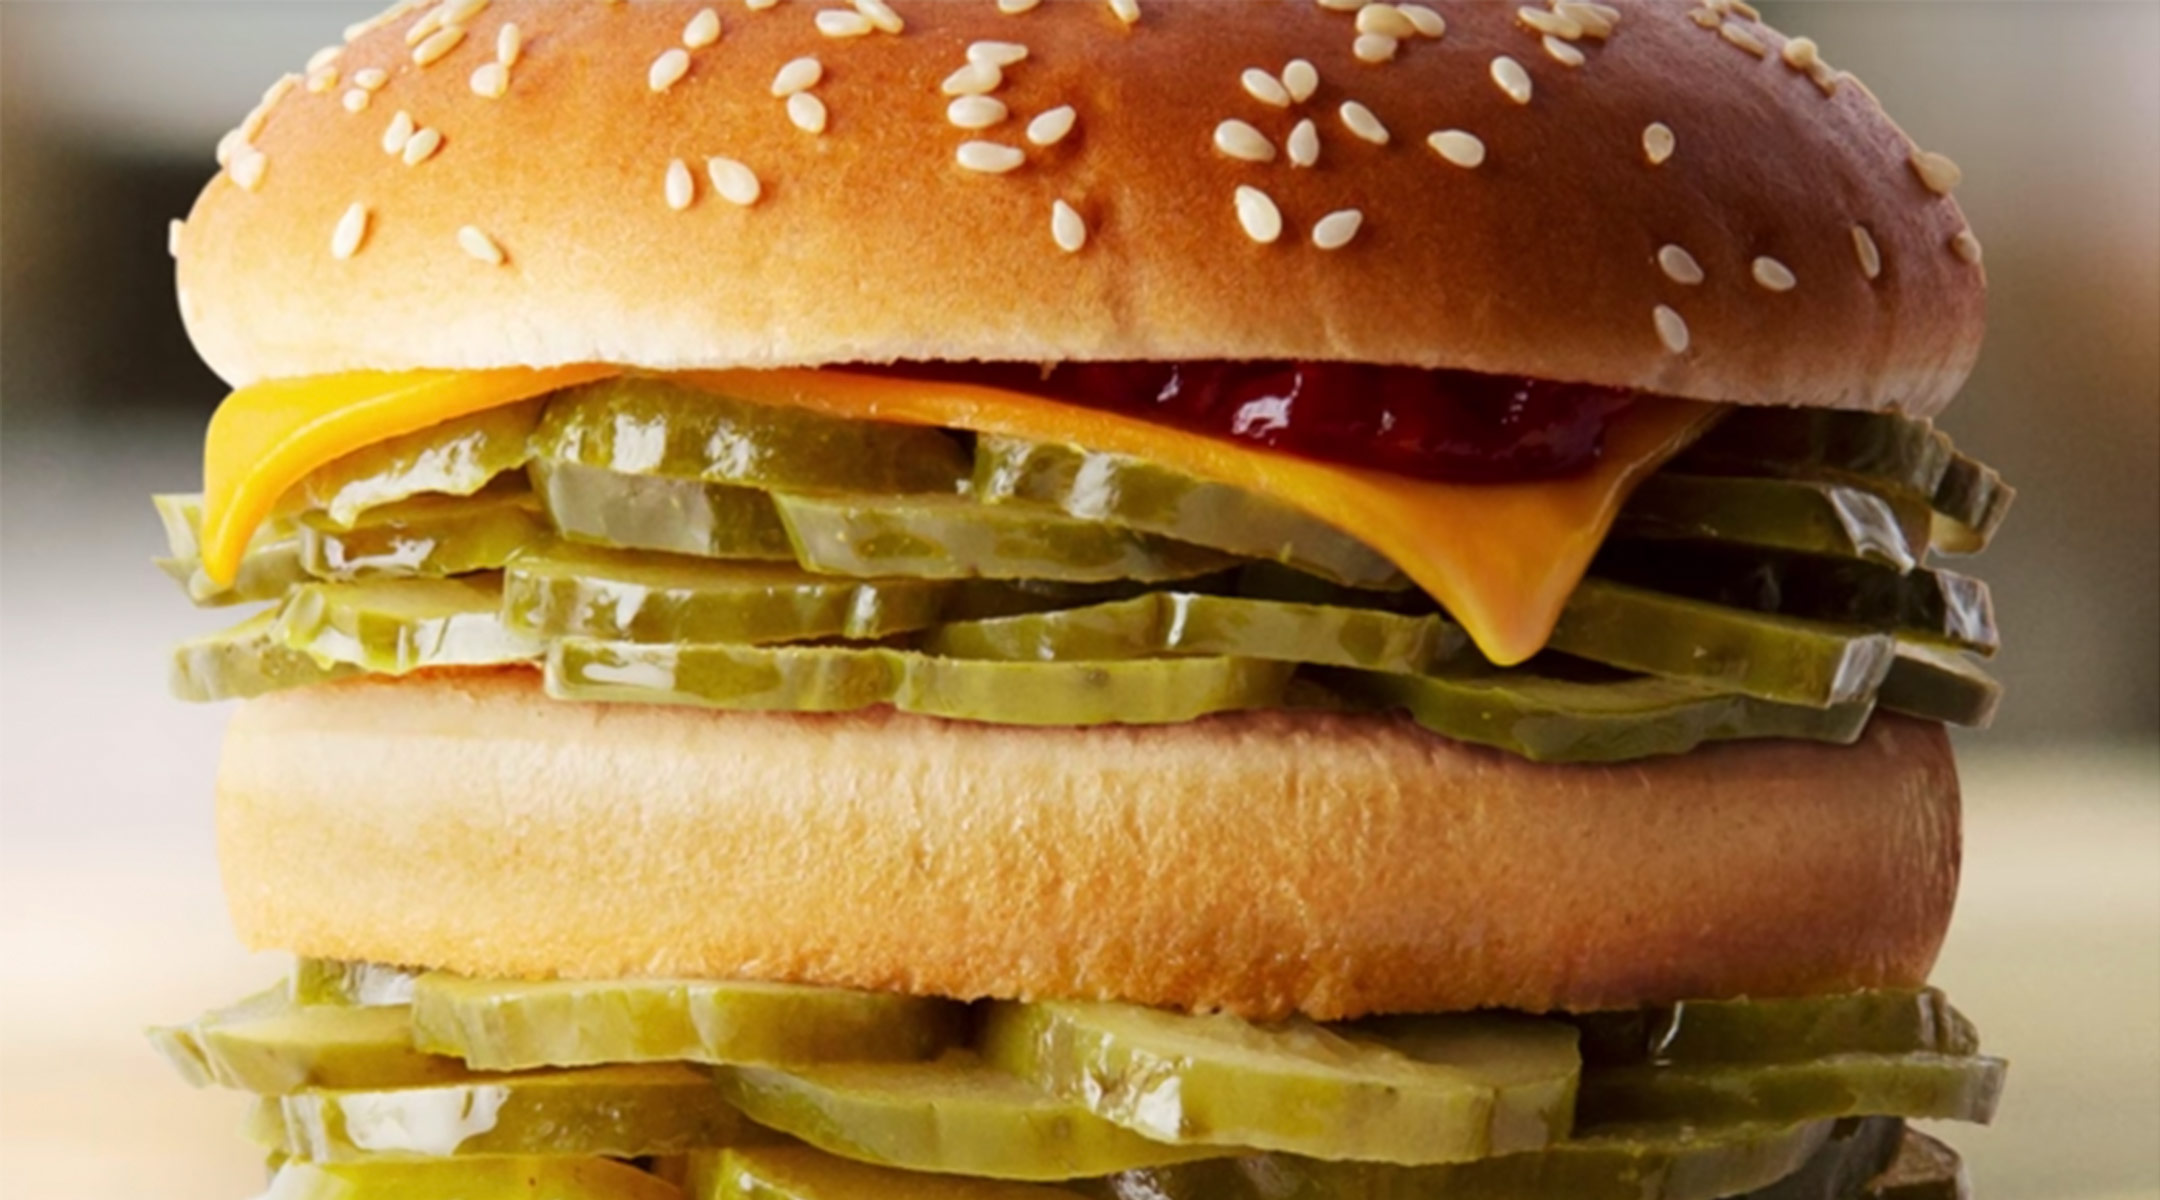 mcdonalds launches mcpickle burger as an april's fools joke. 